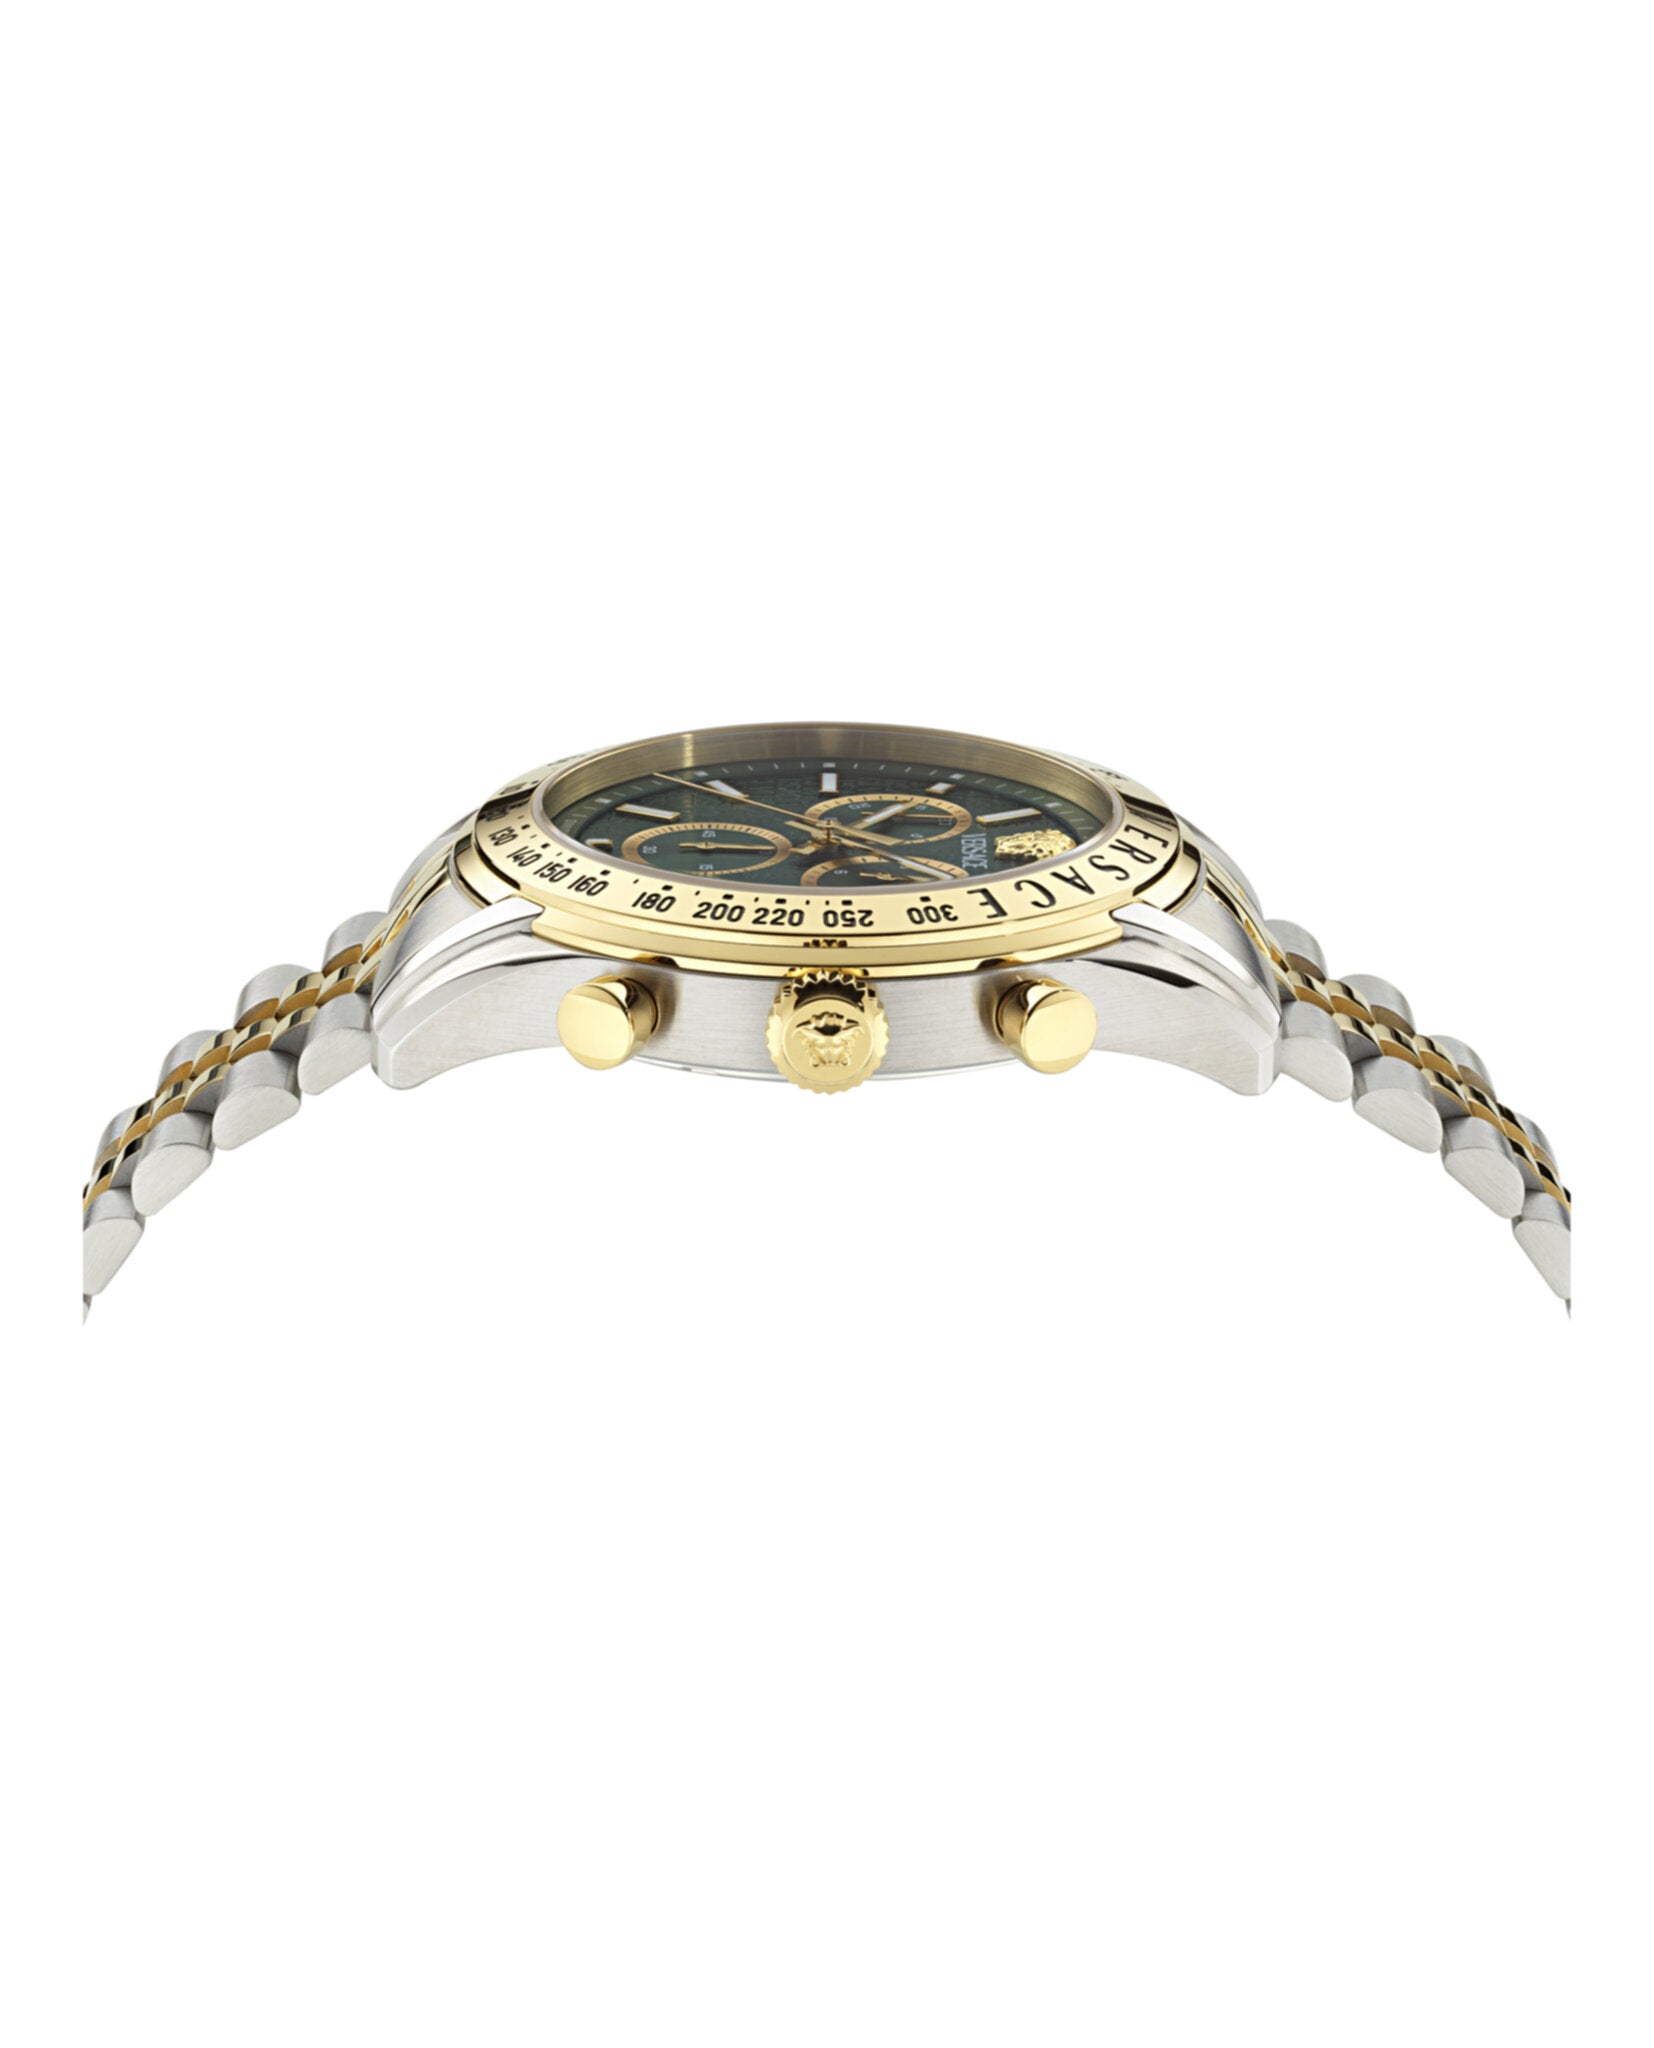 Versace Chrono Master Bracelet Watch